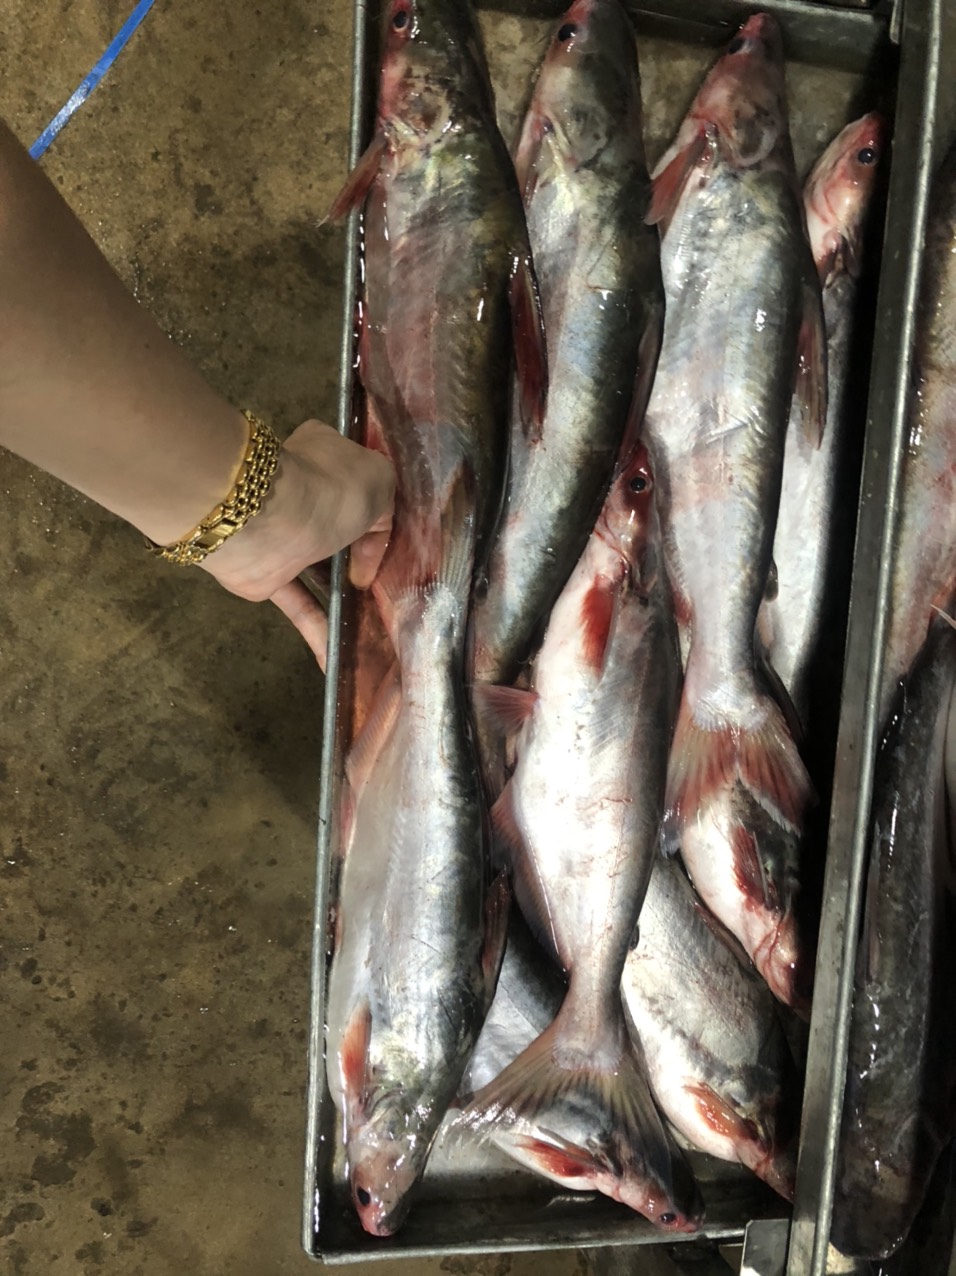 Yellowtail catfish, Shutchi catfish